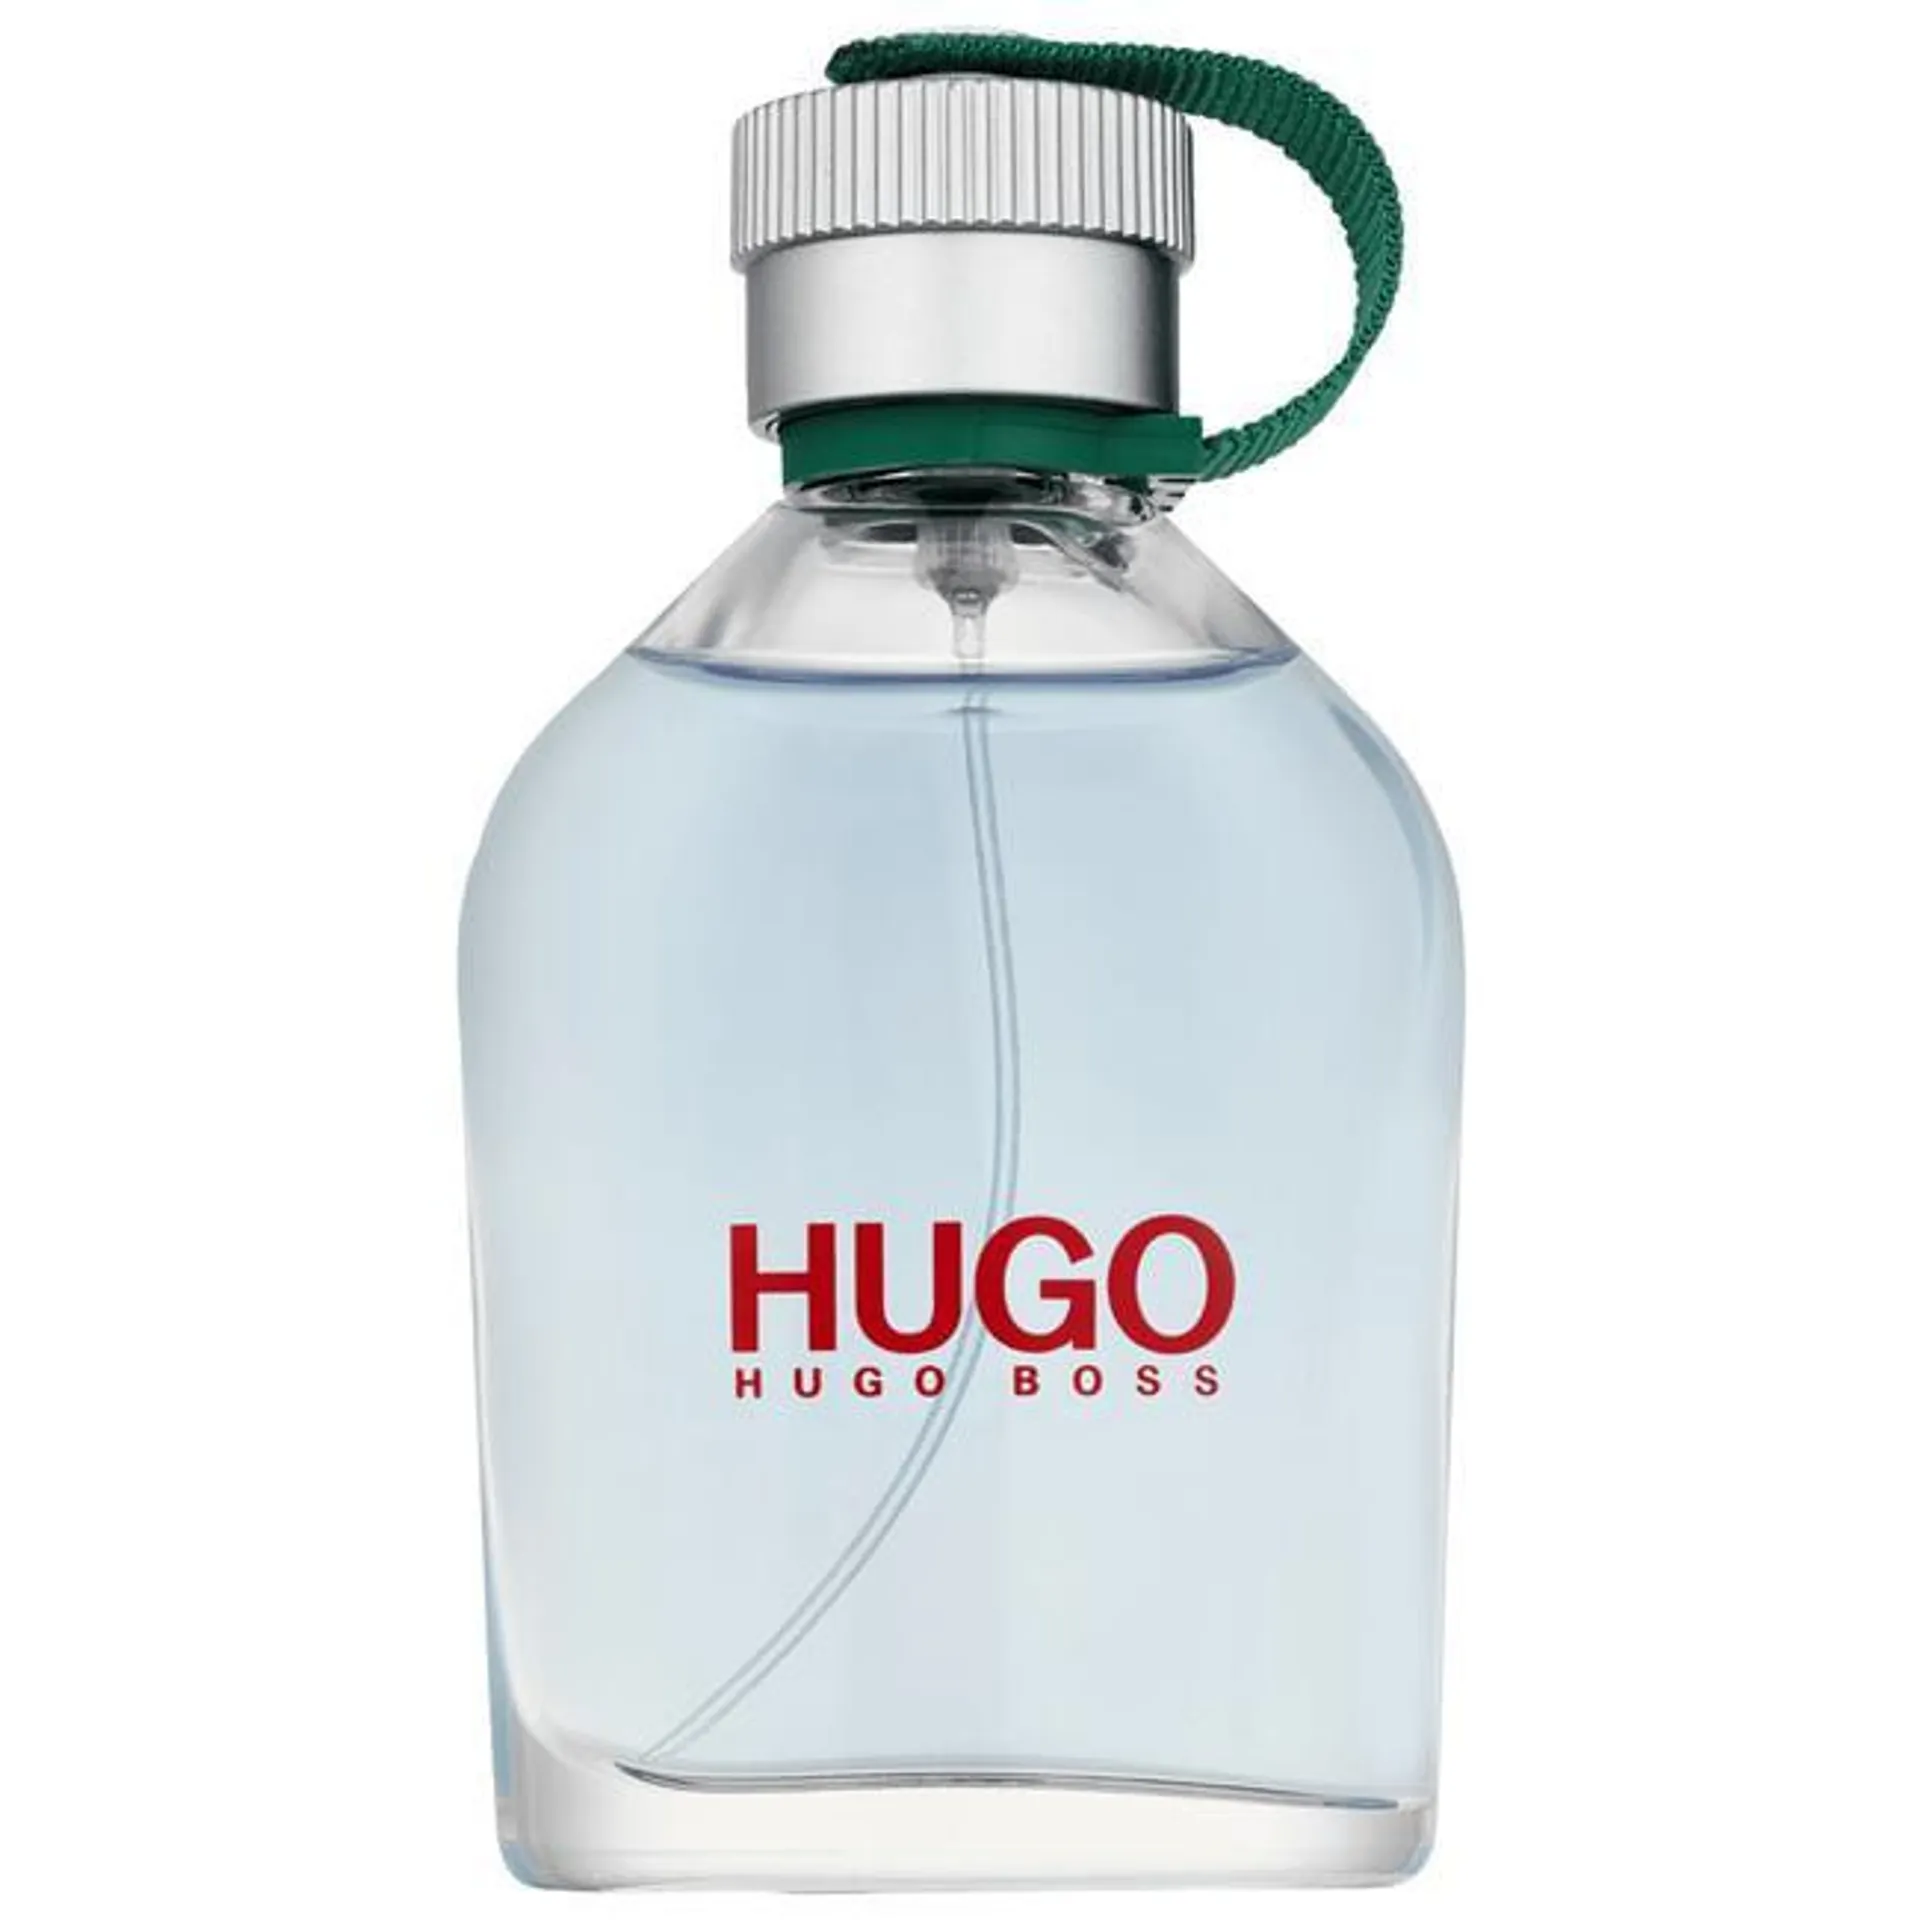 Hugo Boss Hugo Men Eau De Toilette